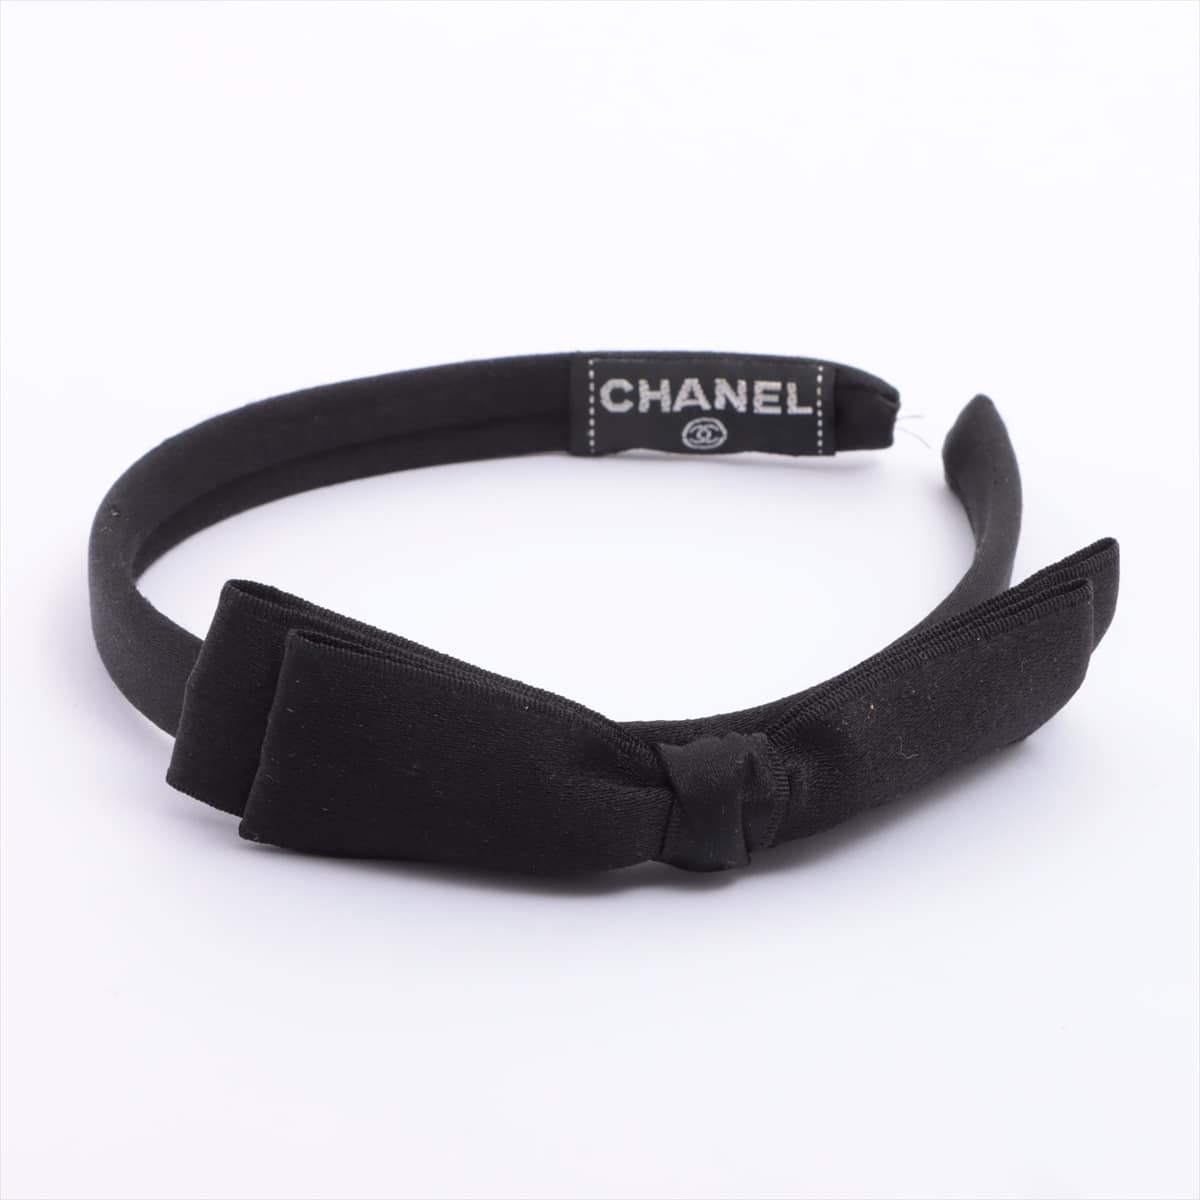 Chanel Ribbon Headband Satin Black